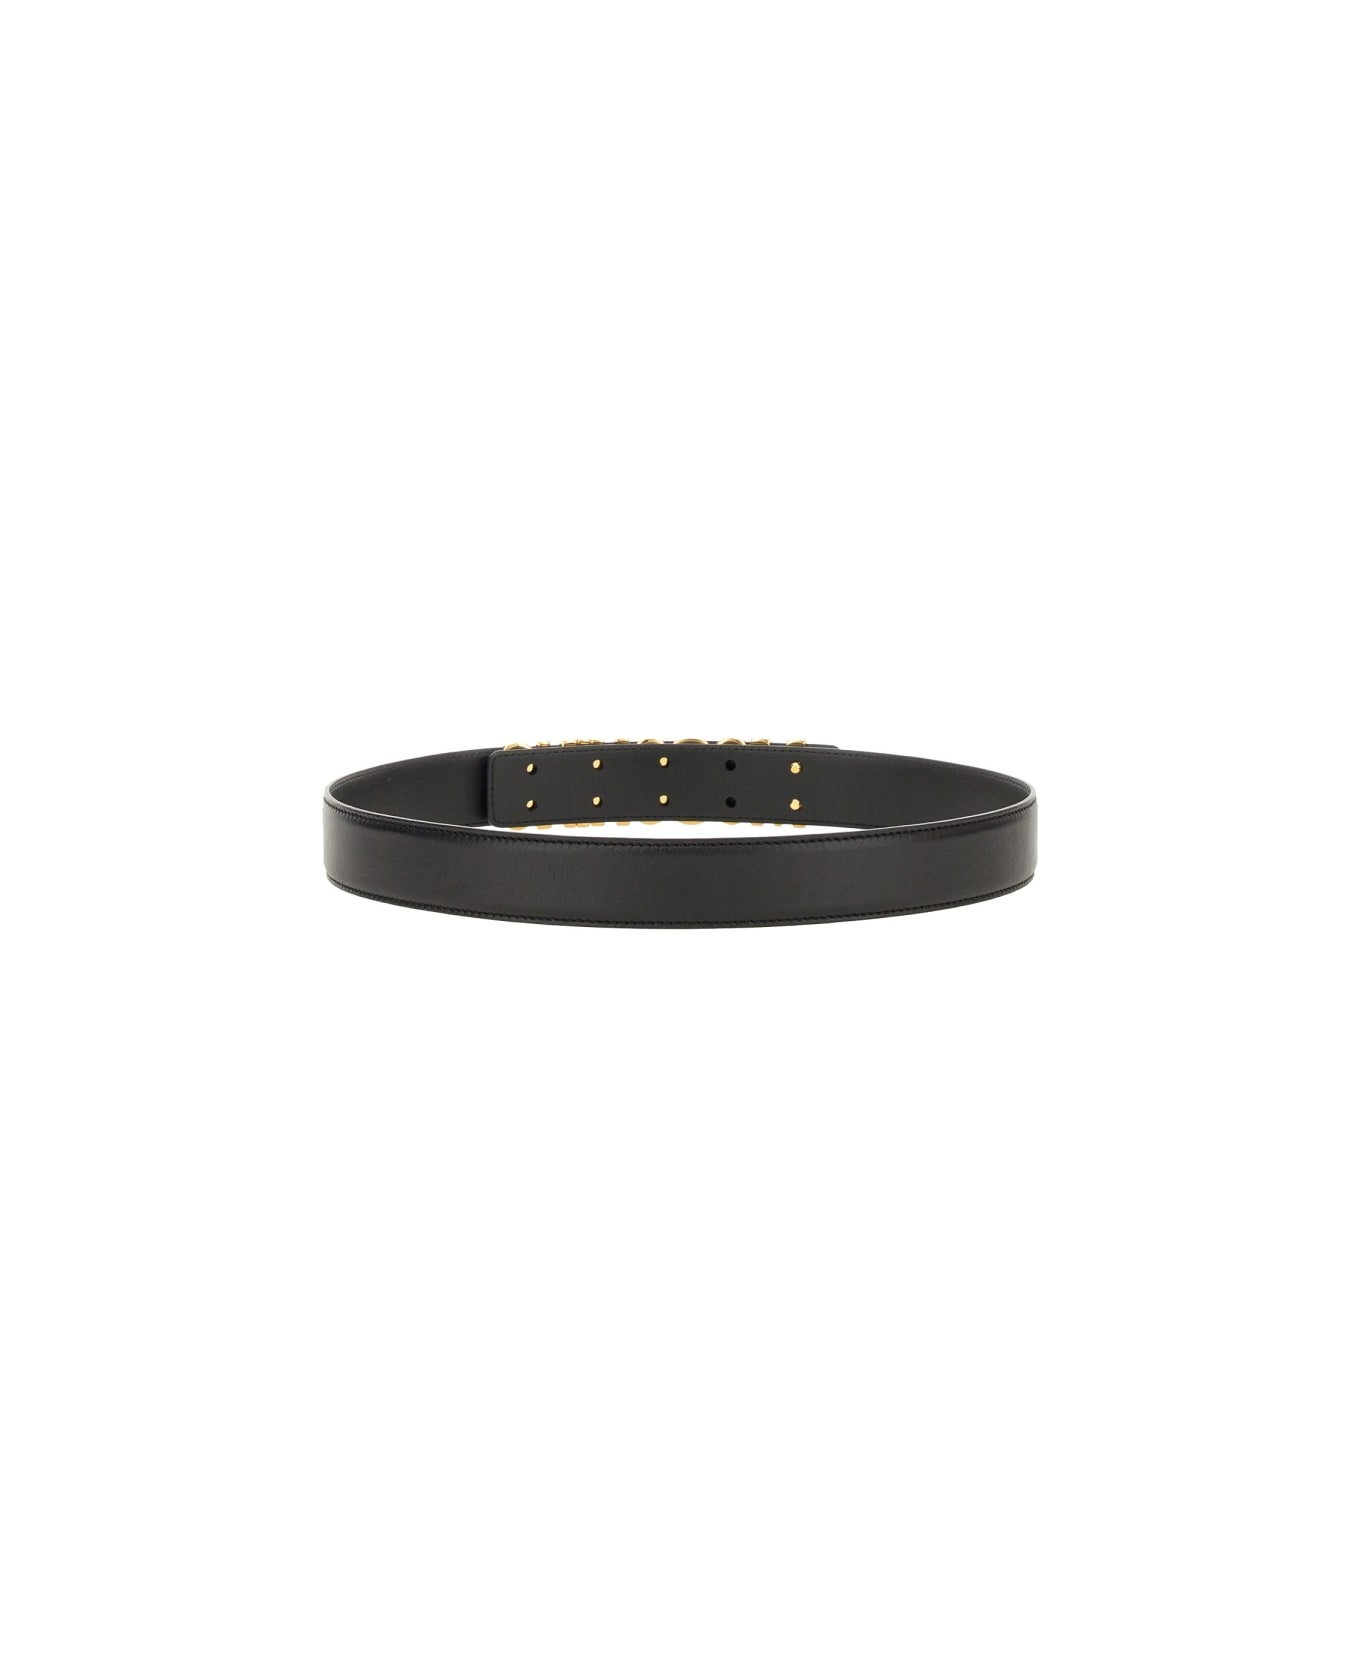 Moschino Belt With Logo - BLACK ベルト